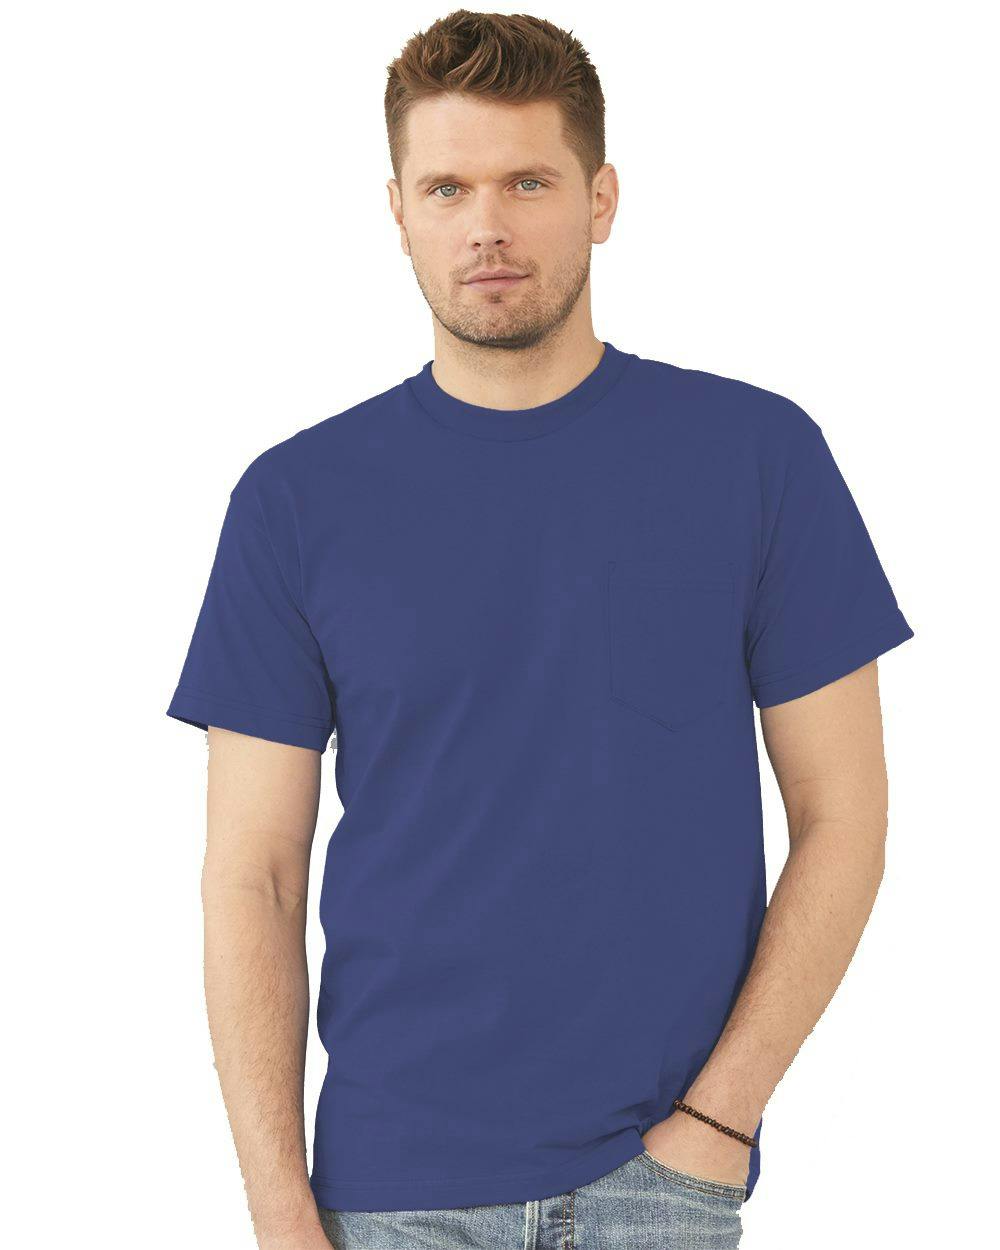 Image for USA-Made Pocket T-Shirt - 7100